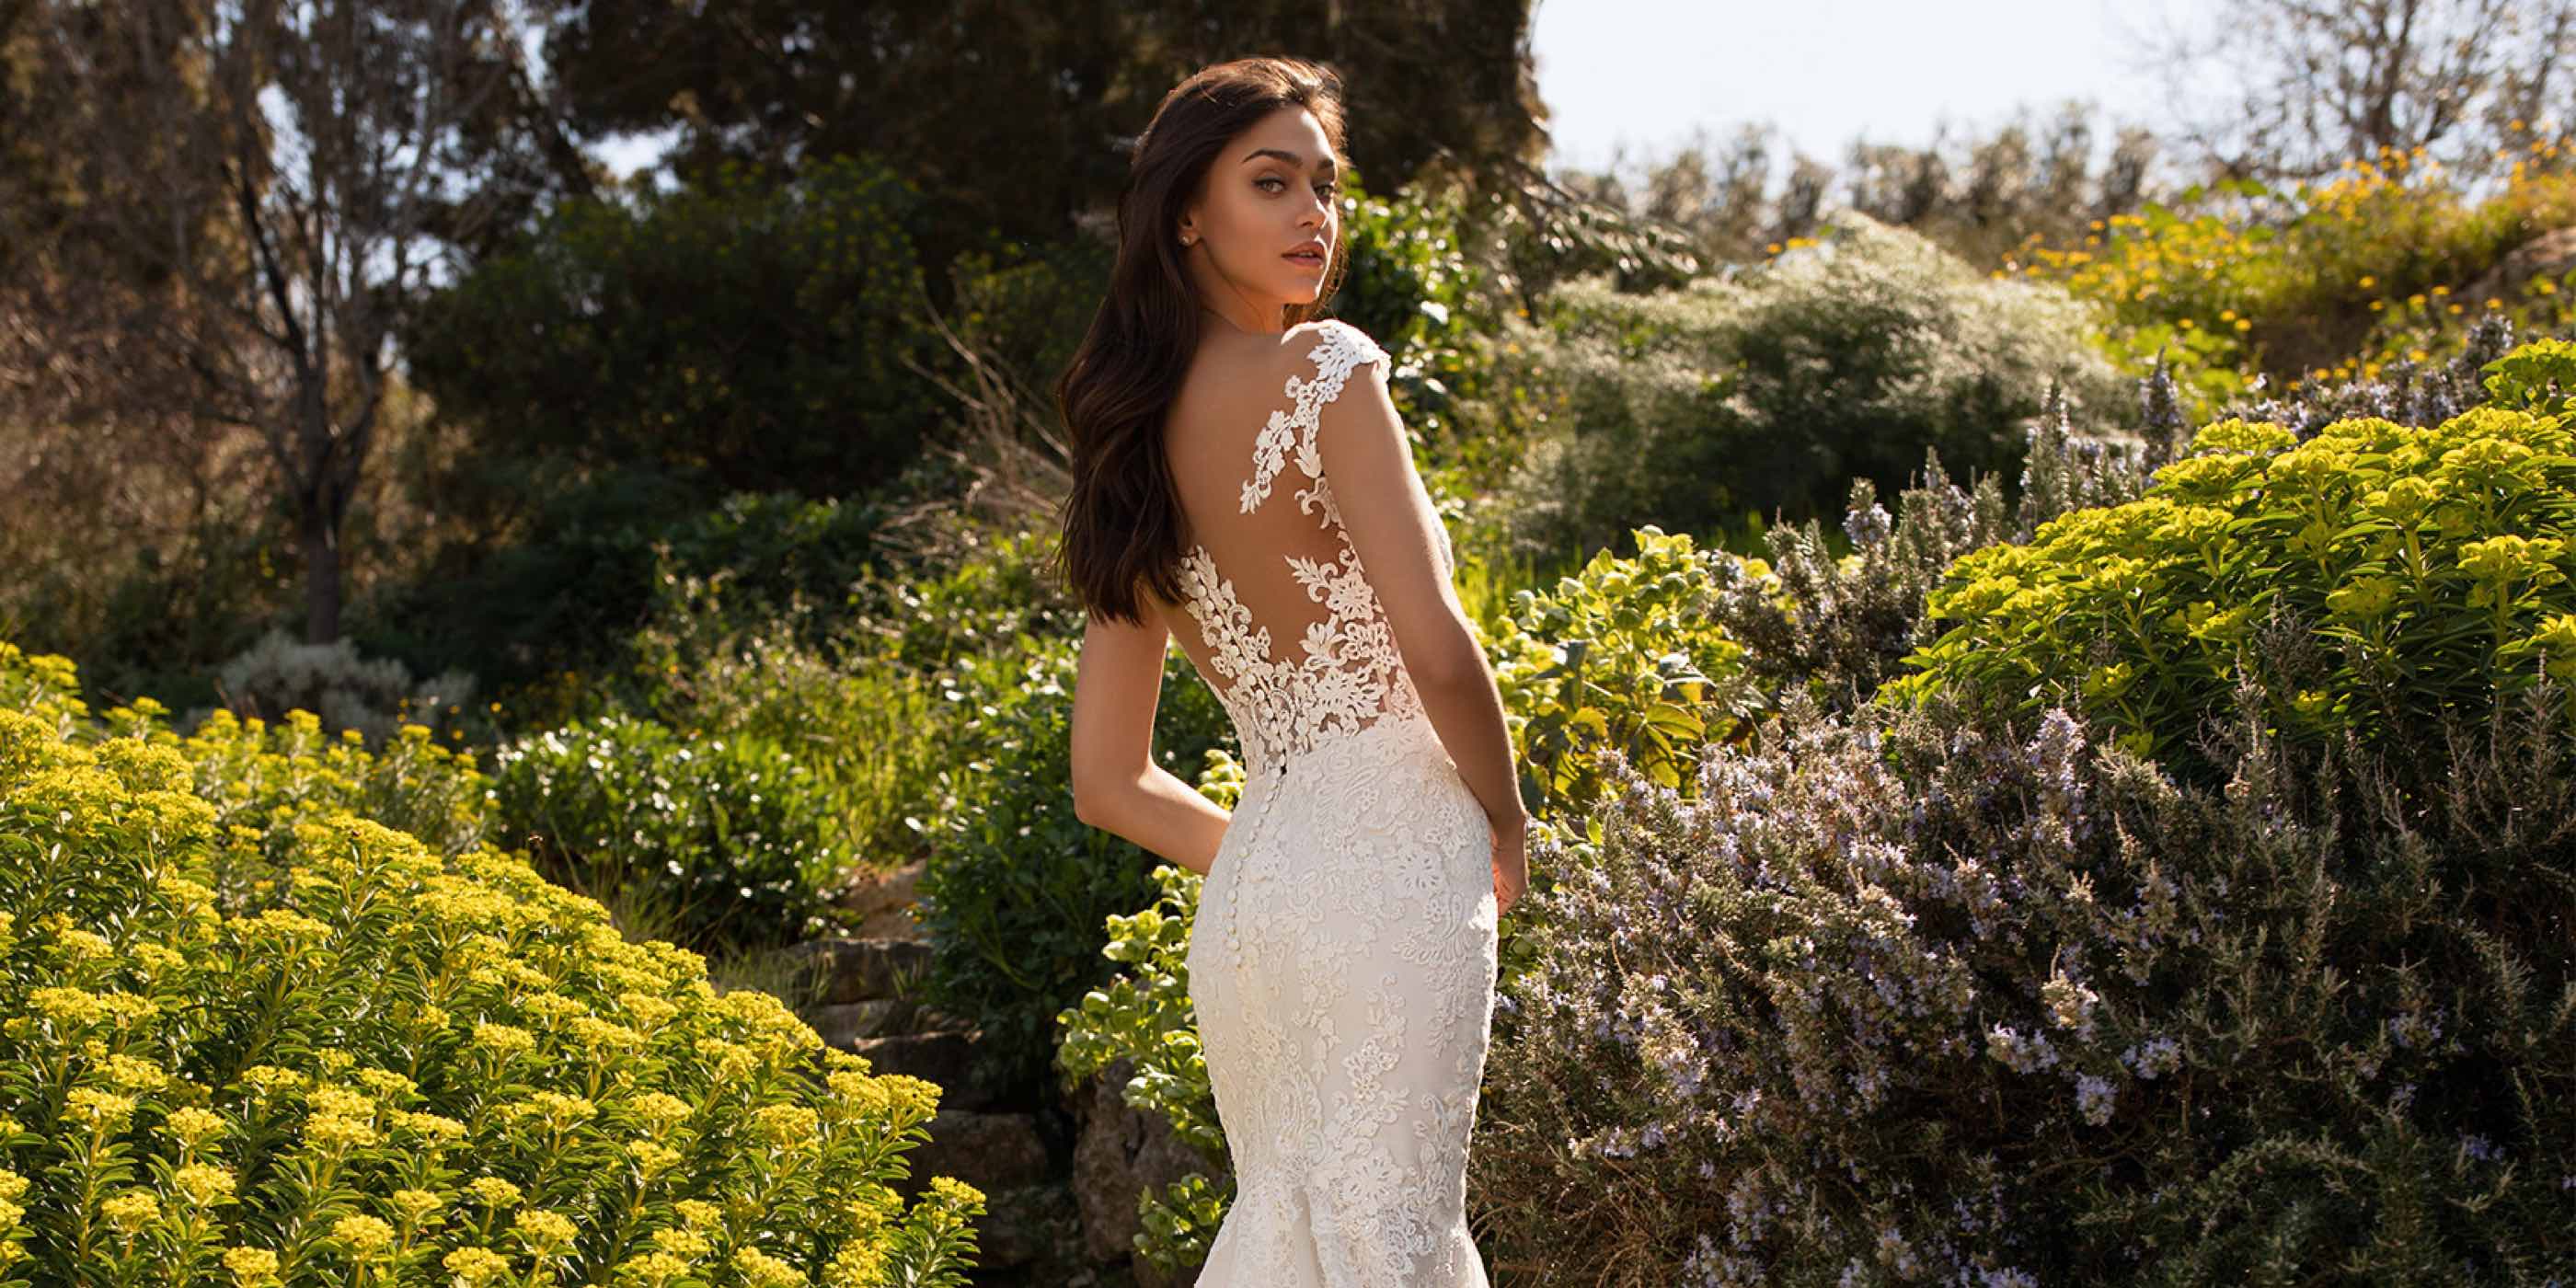 Model wearing a Pronovias bridal gown